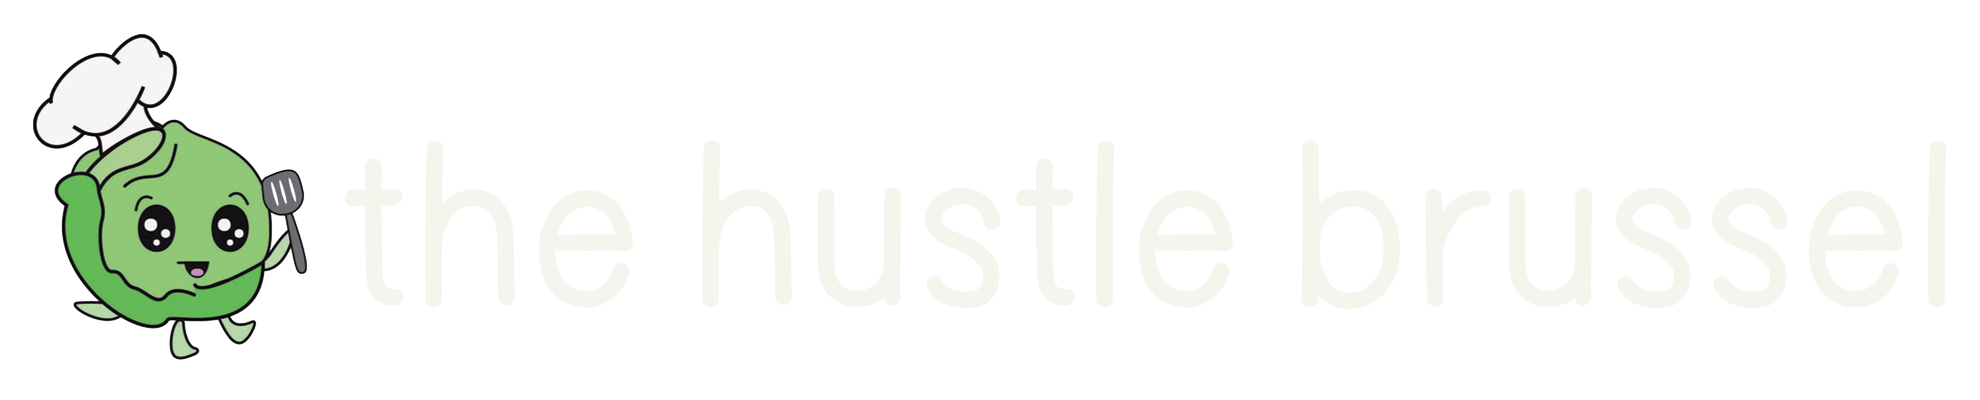 the hustle brussel | organic plant based meals